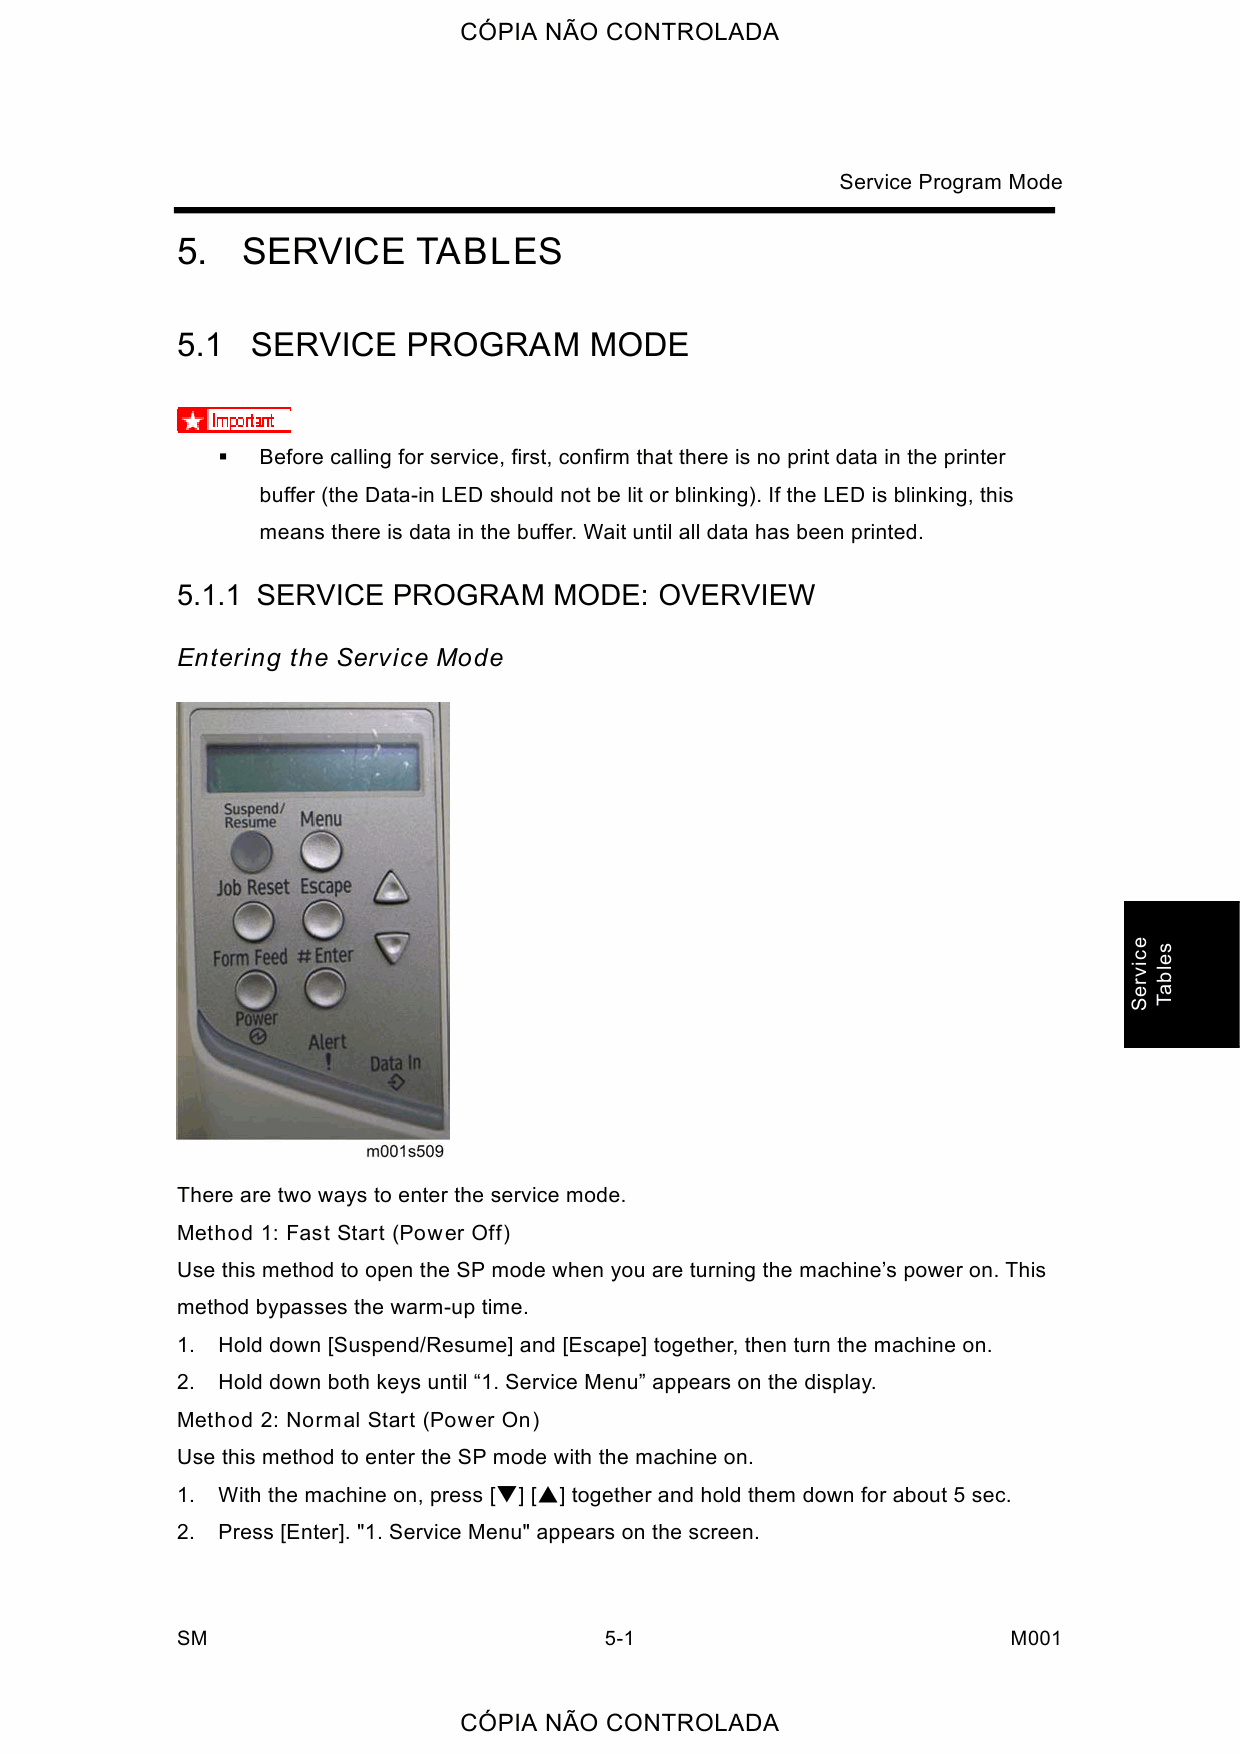 RICOH Aficio SP-4200N M001 Service Manual-4